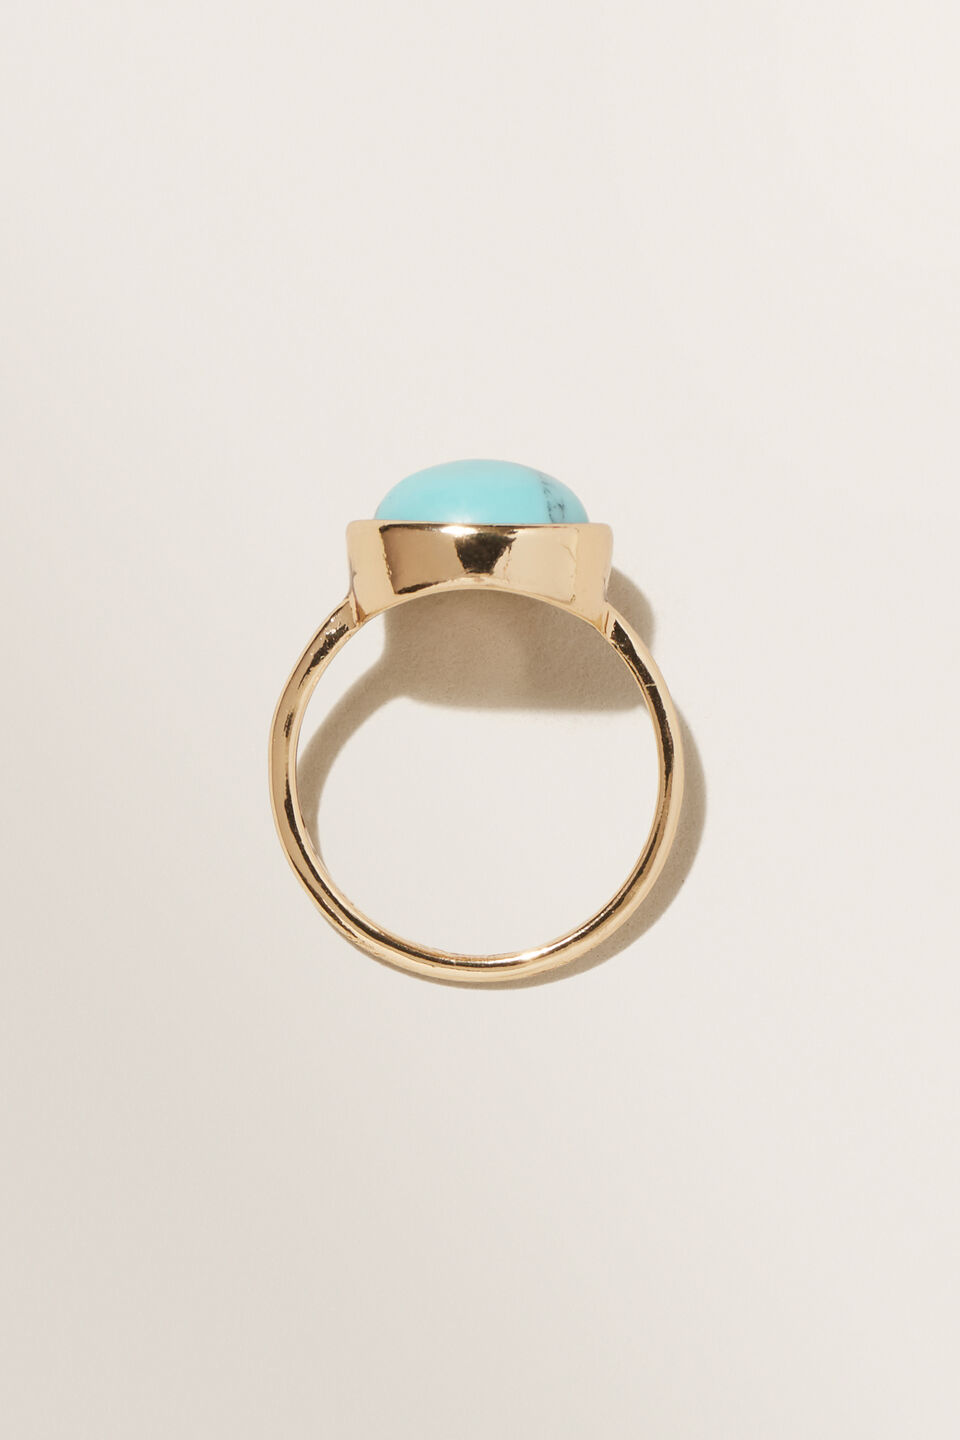 Stone Ring  Turquoise